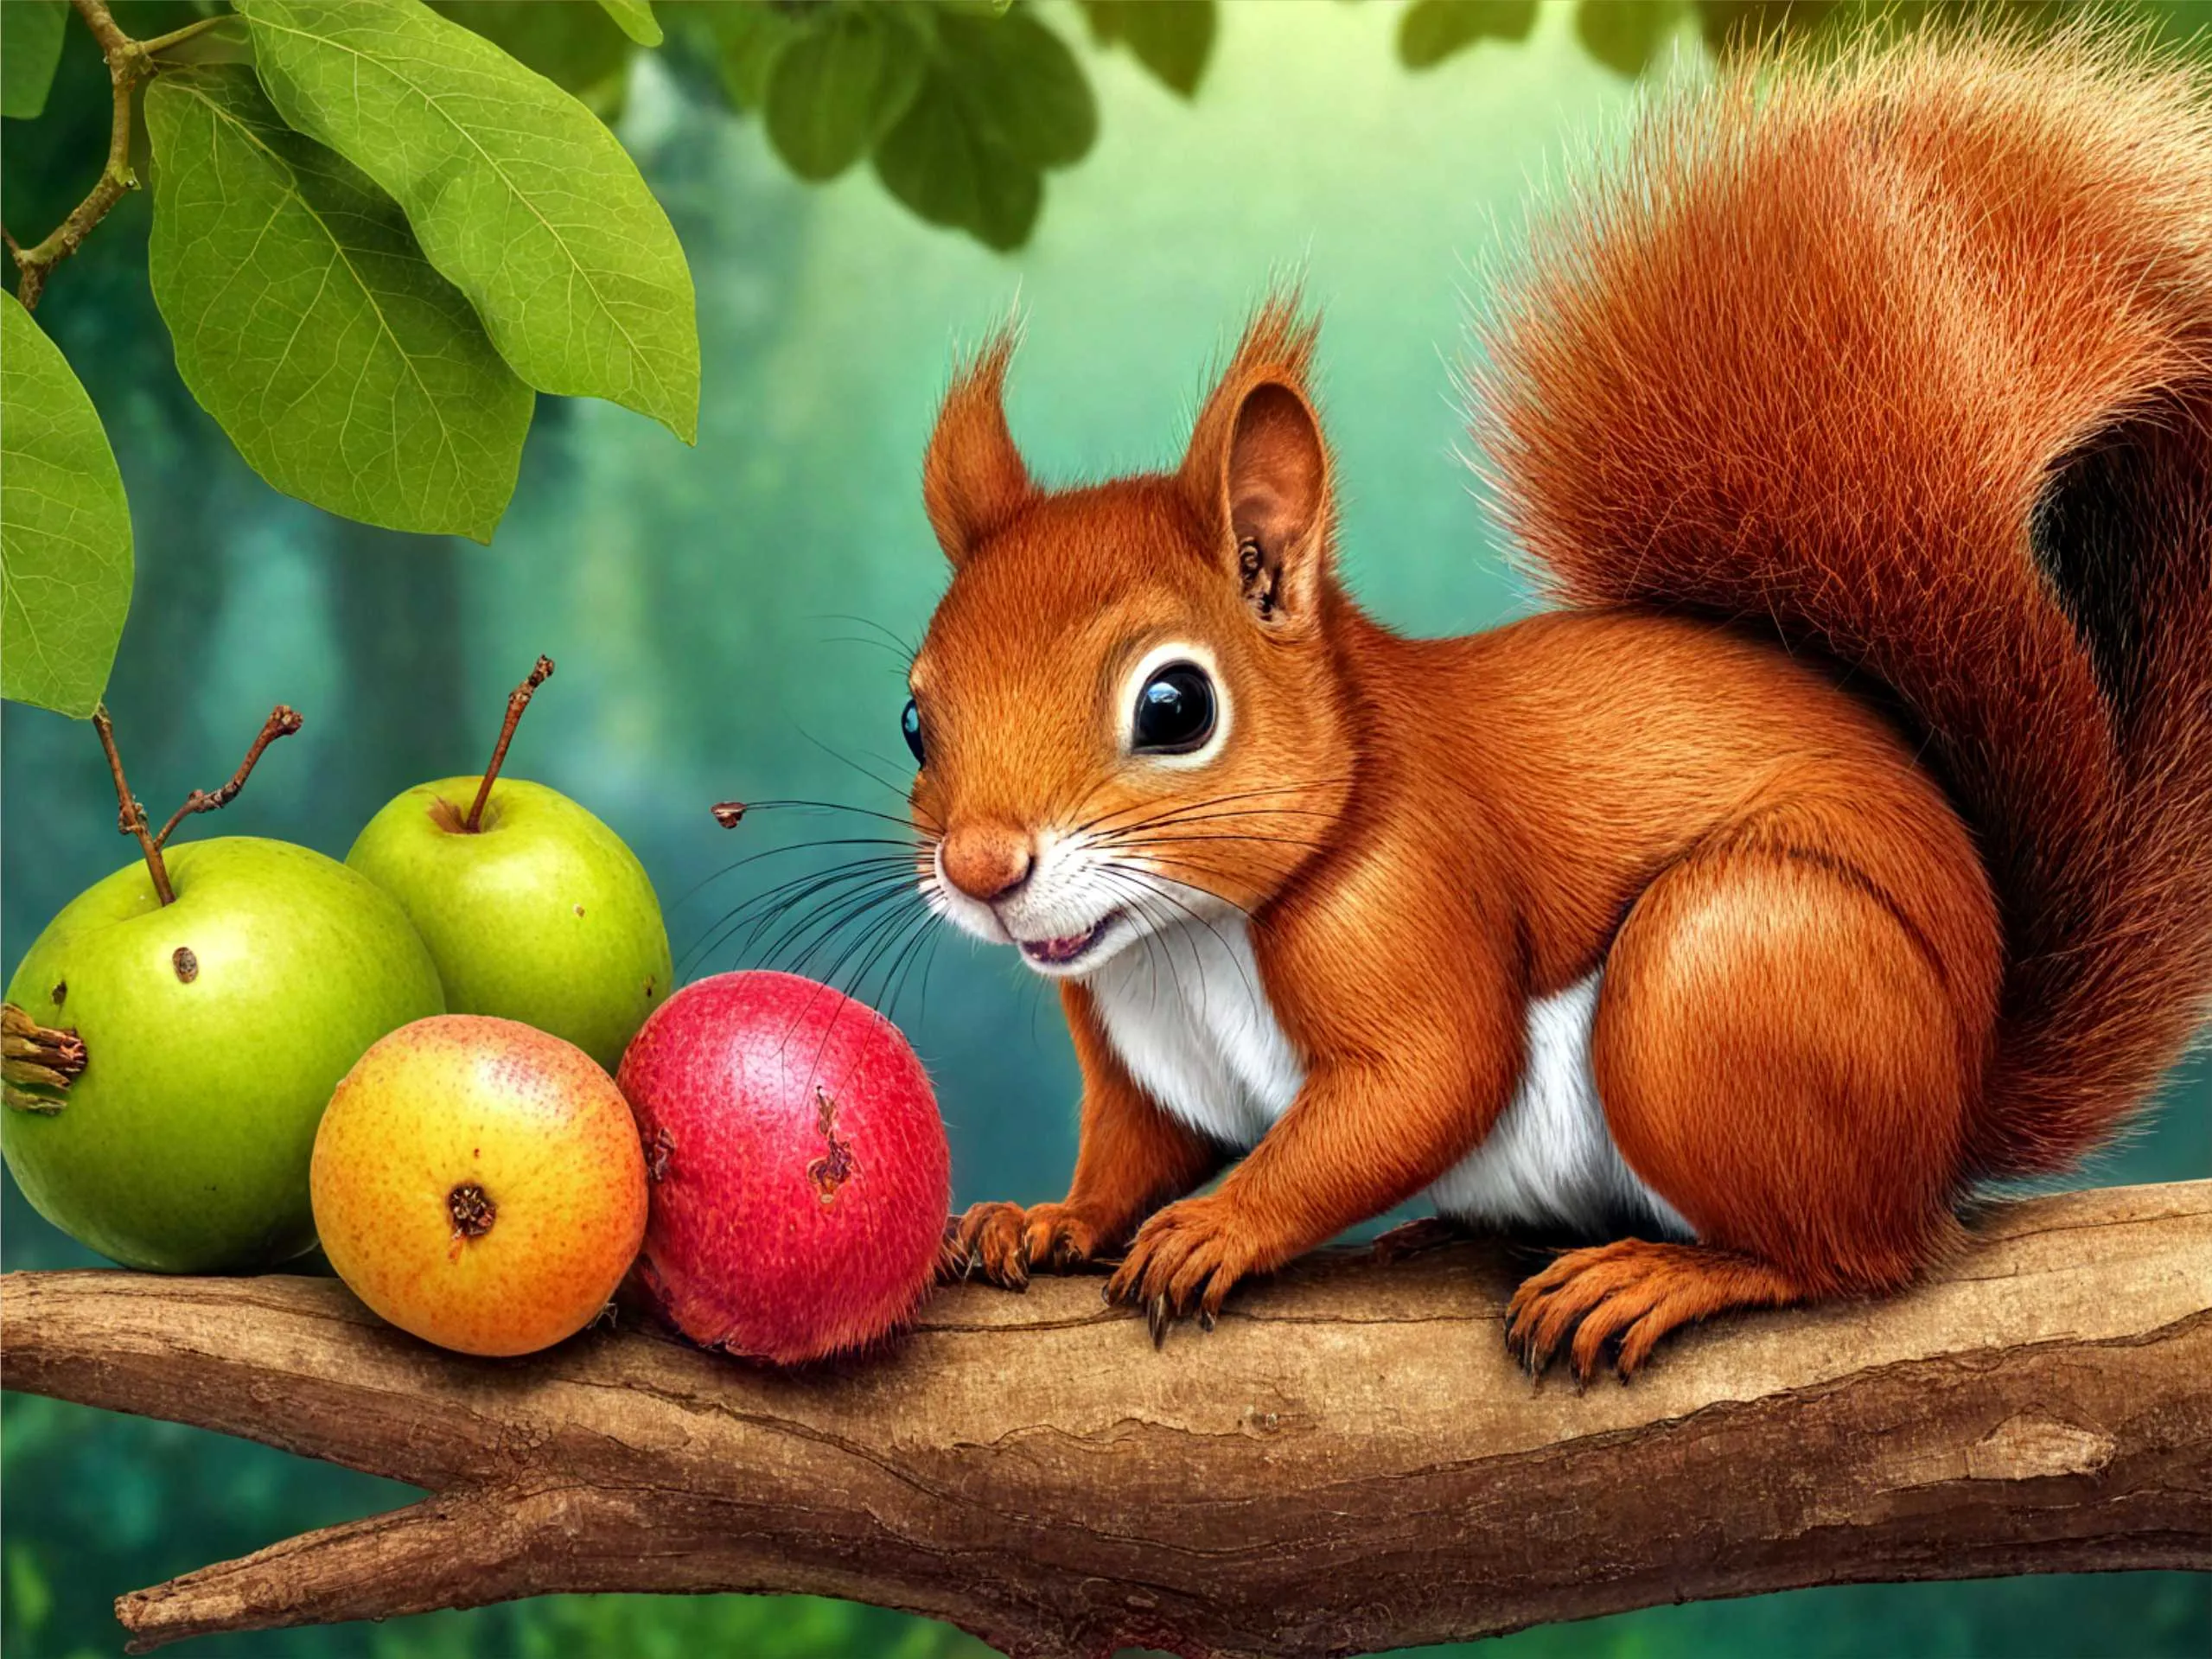 cartoon image of a squirrel in jungle